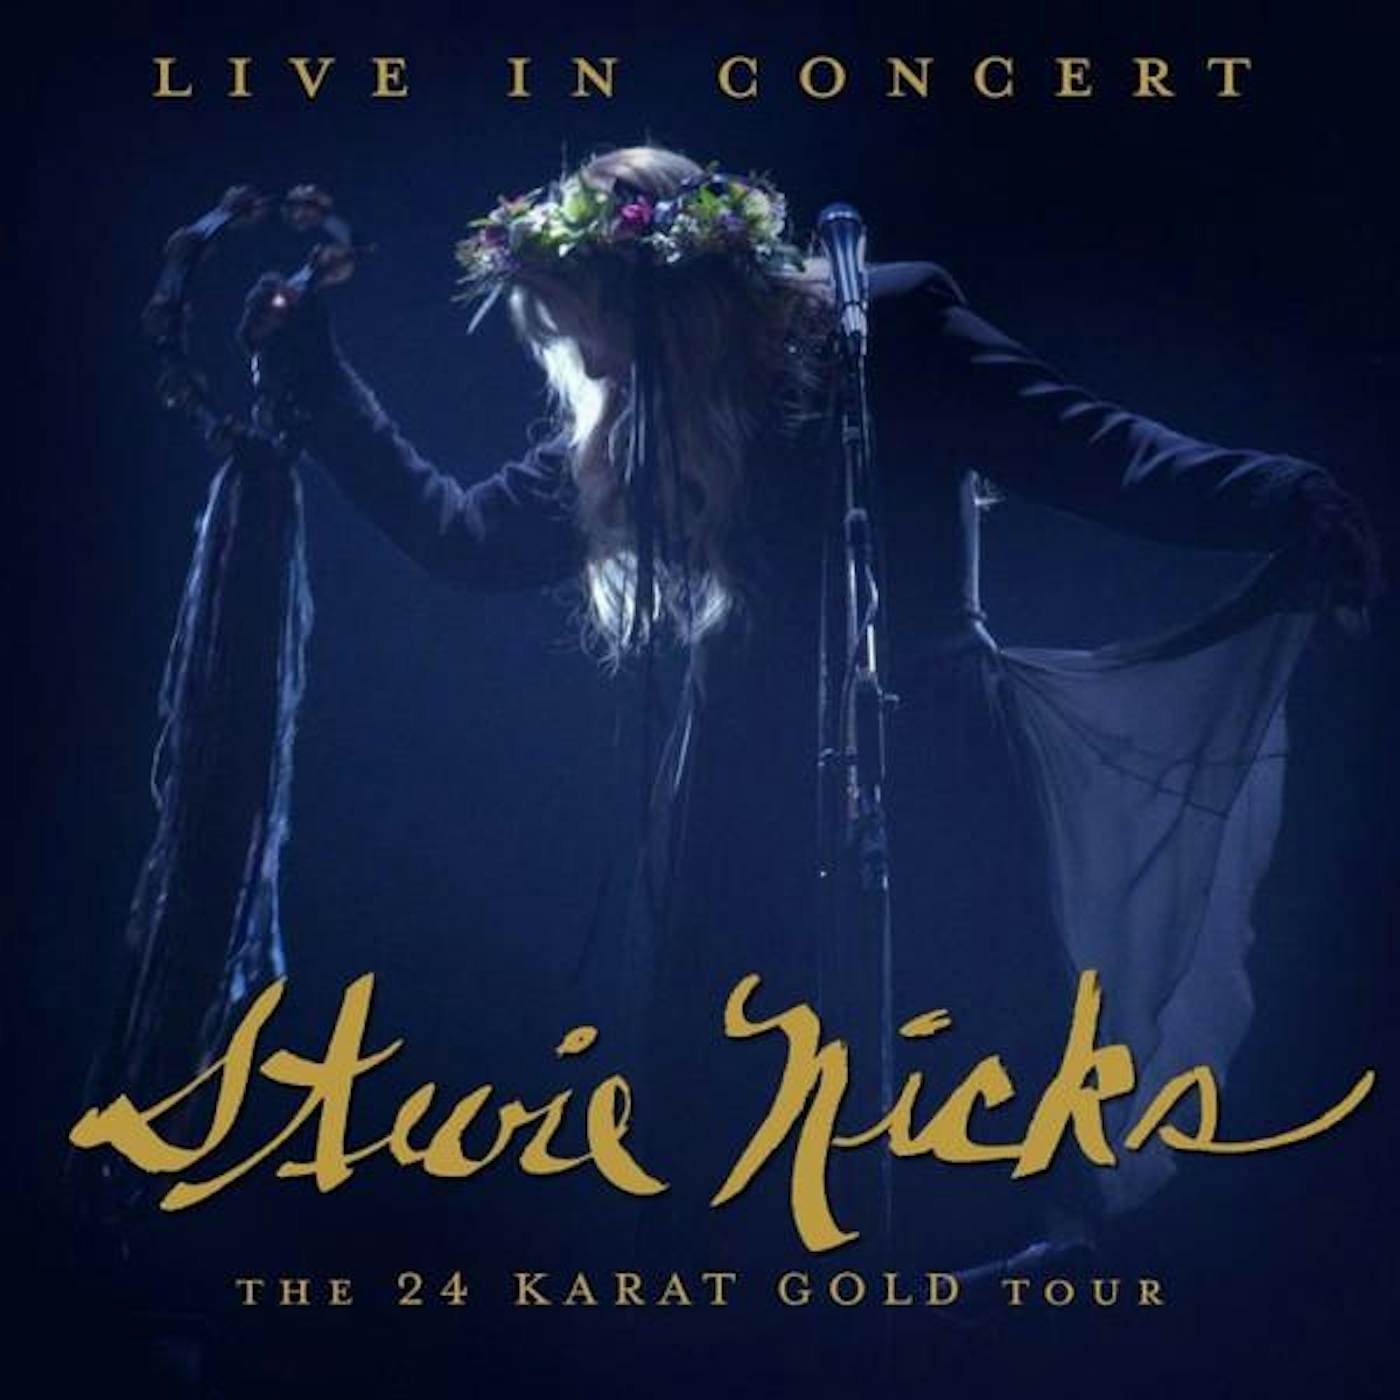 Stevie Nicks LIVE IN CONCERT THE 24 KARAT GOLD TOUR CD